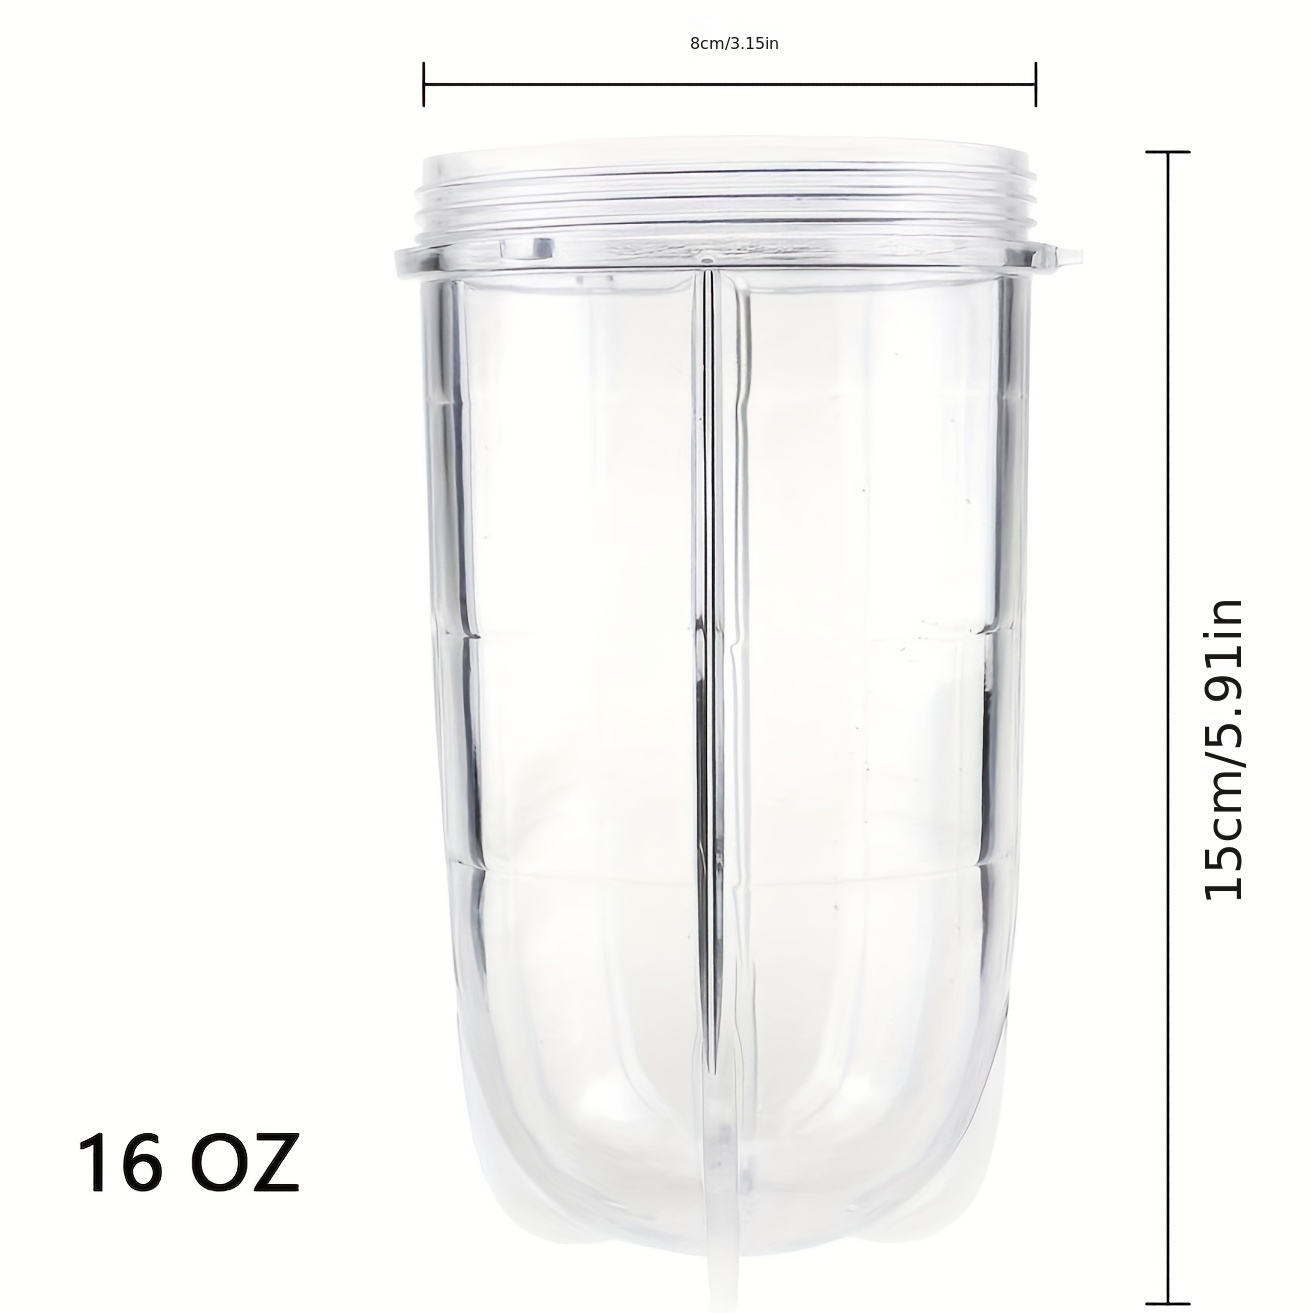 Blendin 2 Pack Replacement 16oz Tall Jar Cups,Fits Original Magic